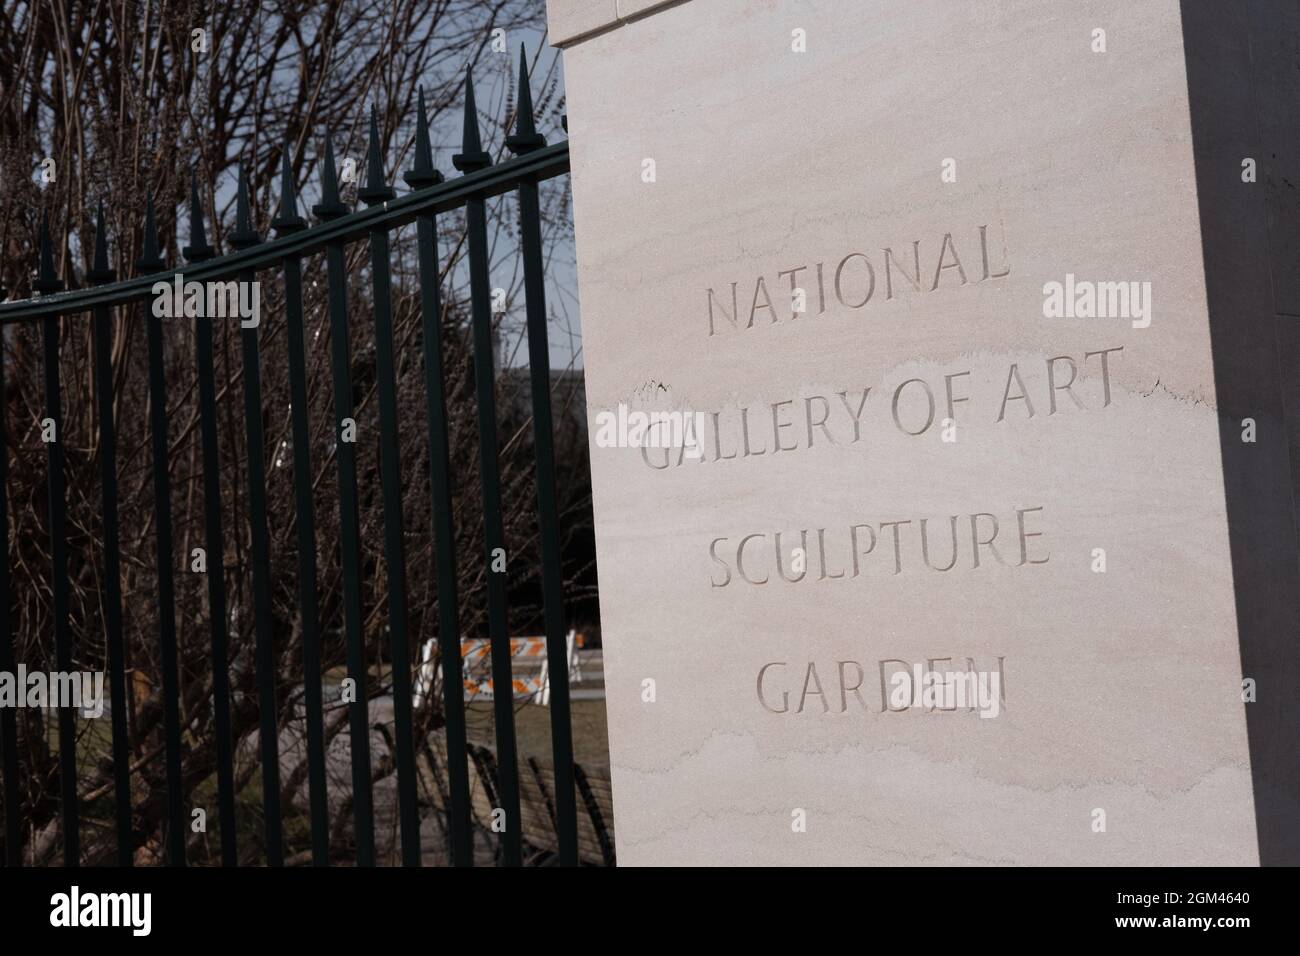 National Gallery of Art Sculpture Garden Sign Stock Photo